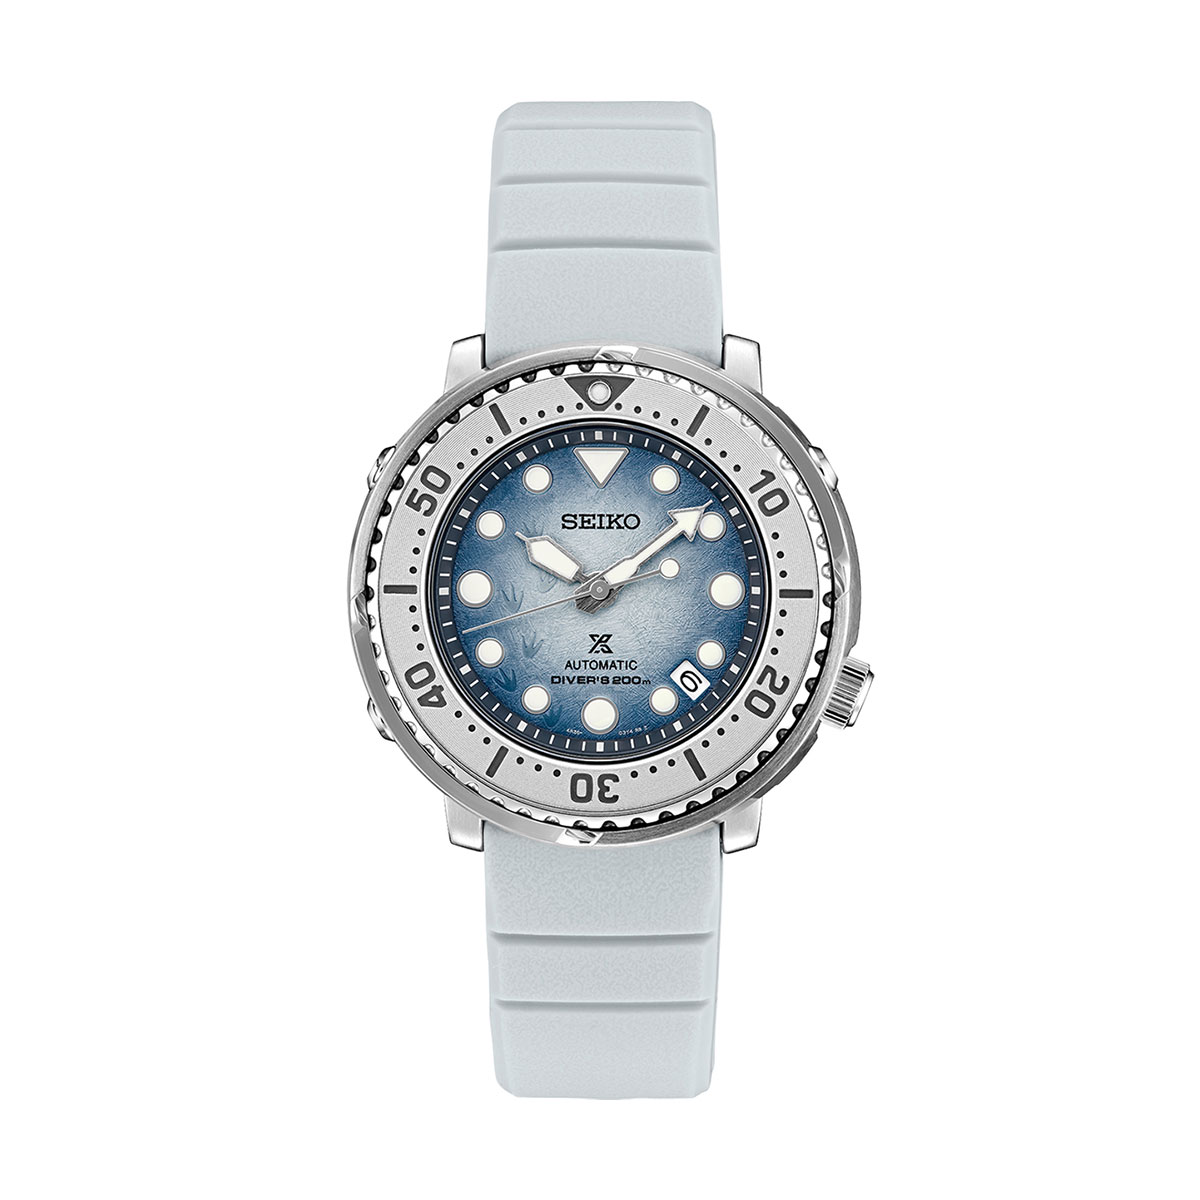 Seiko Prospex Special Edition 43mm Watch, Light Blue Dial | SRPG59 |  Borsheims